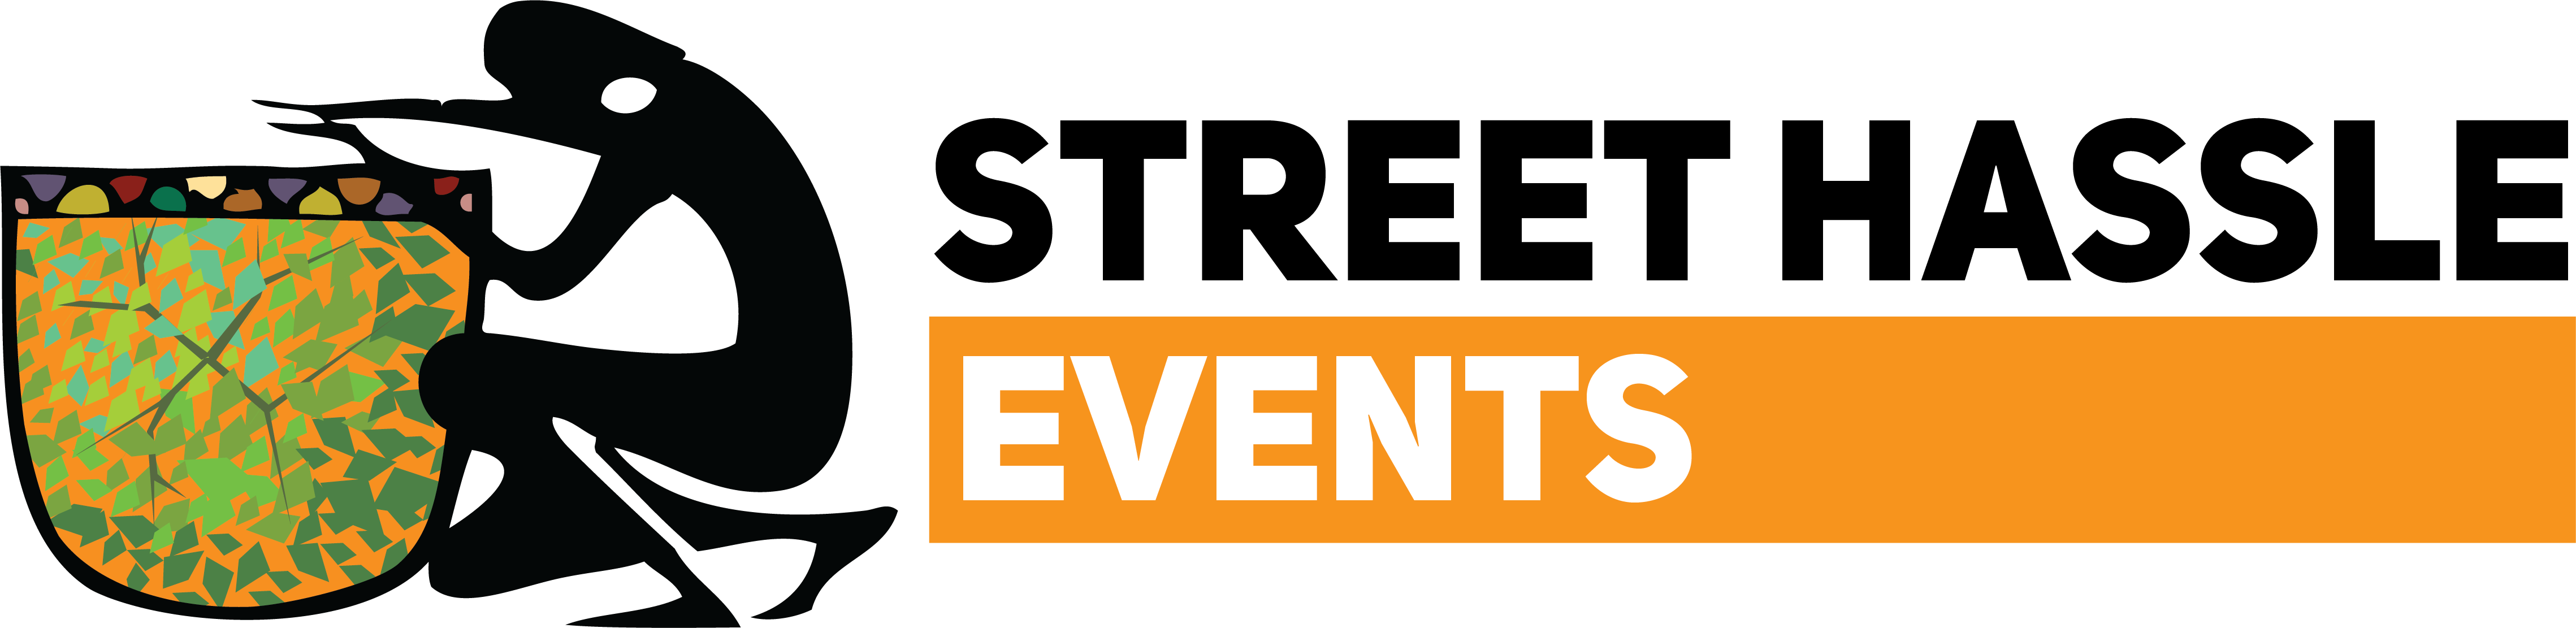 Street Hassle Events Logo